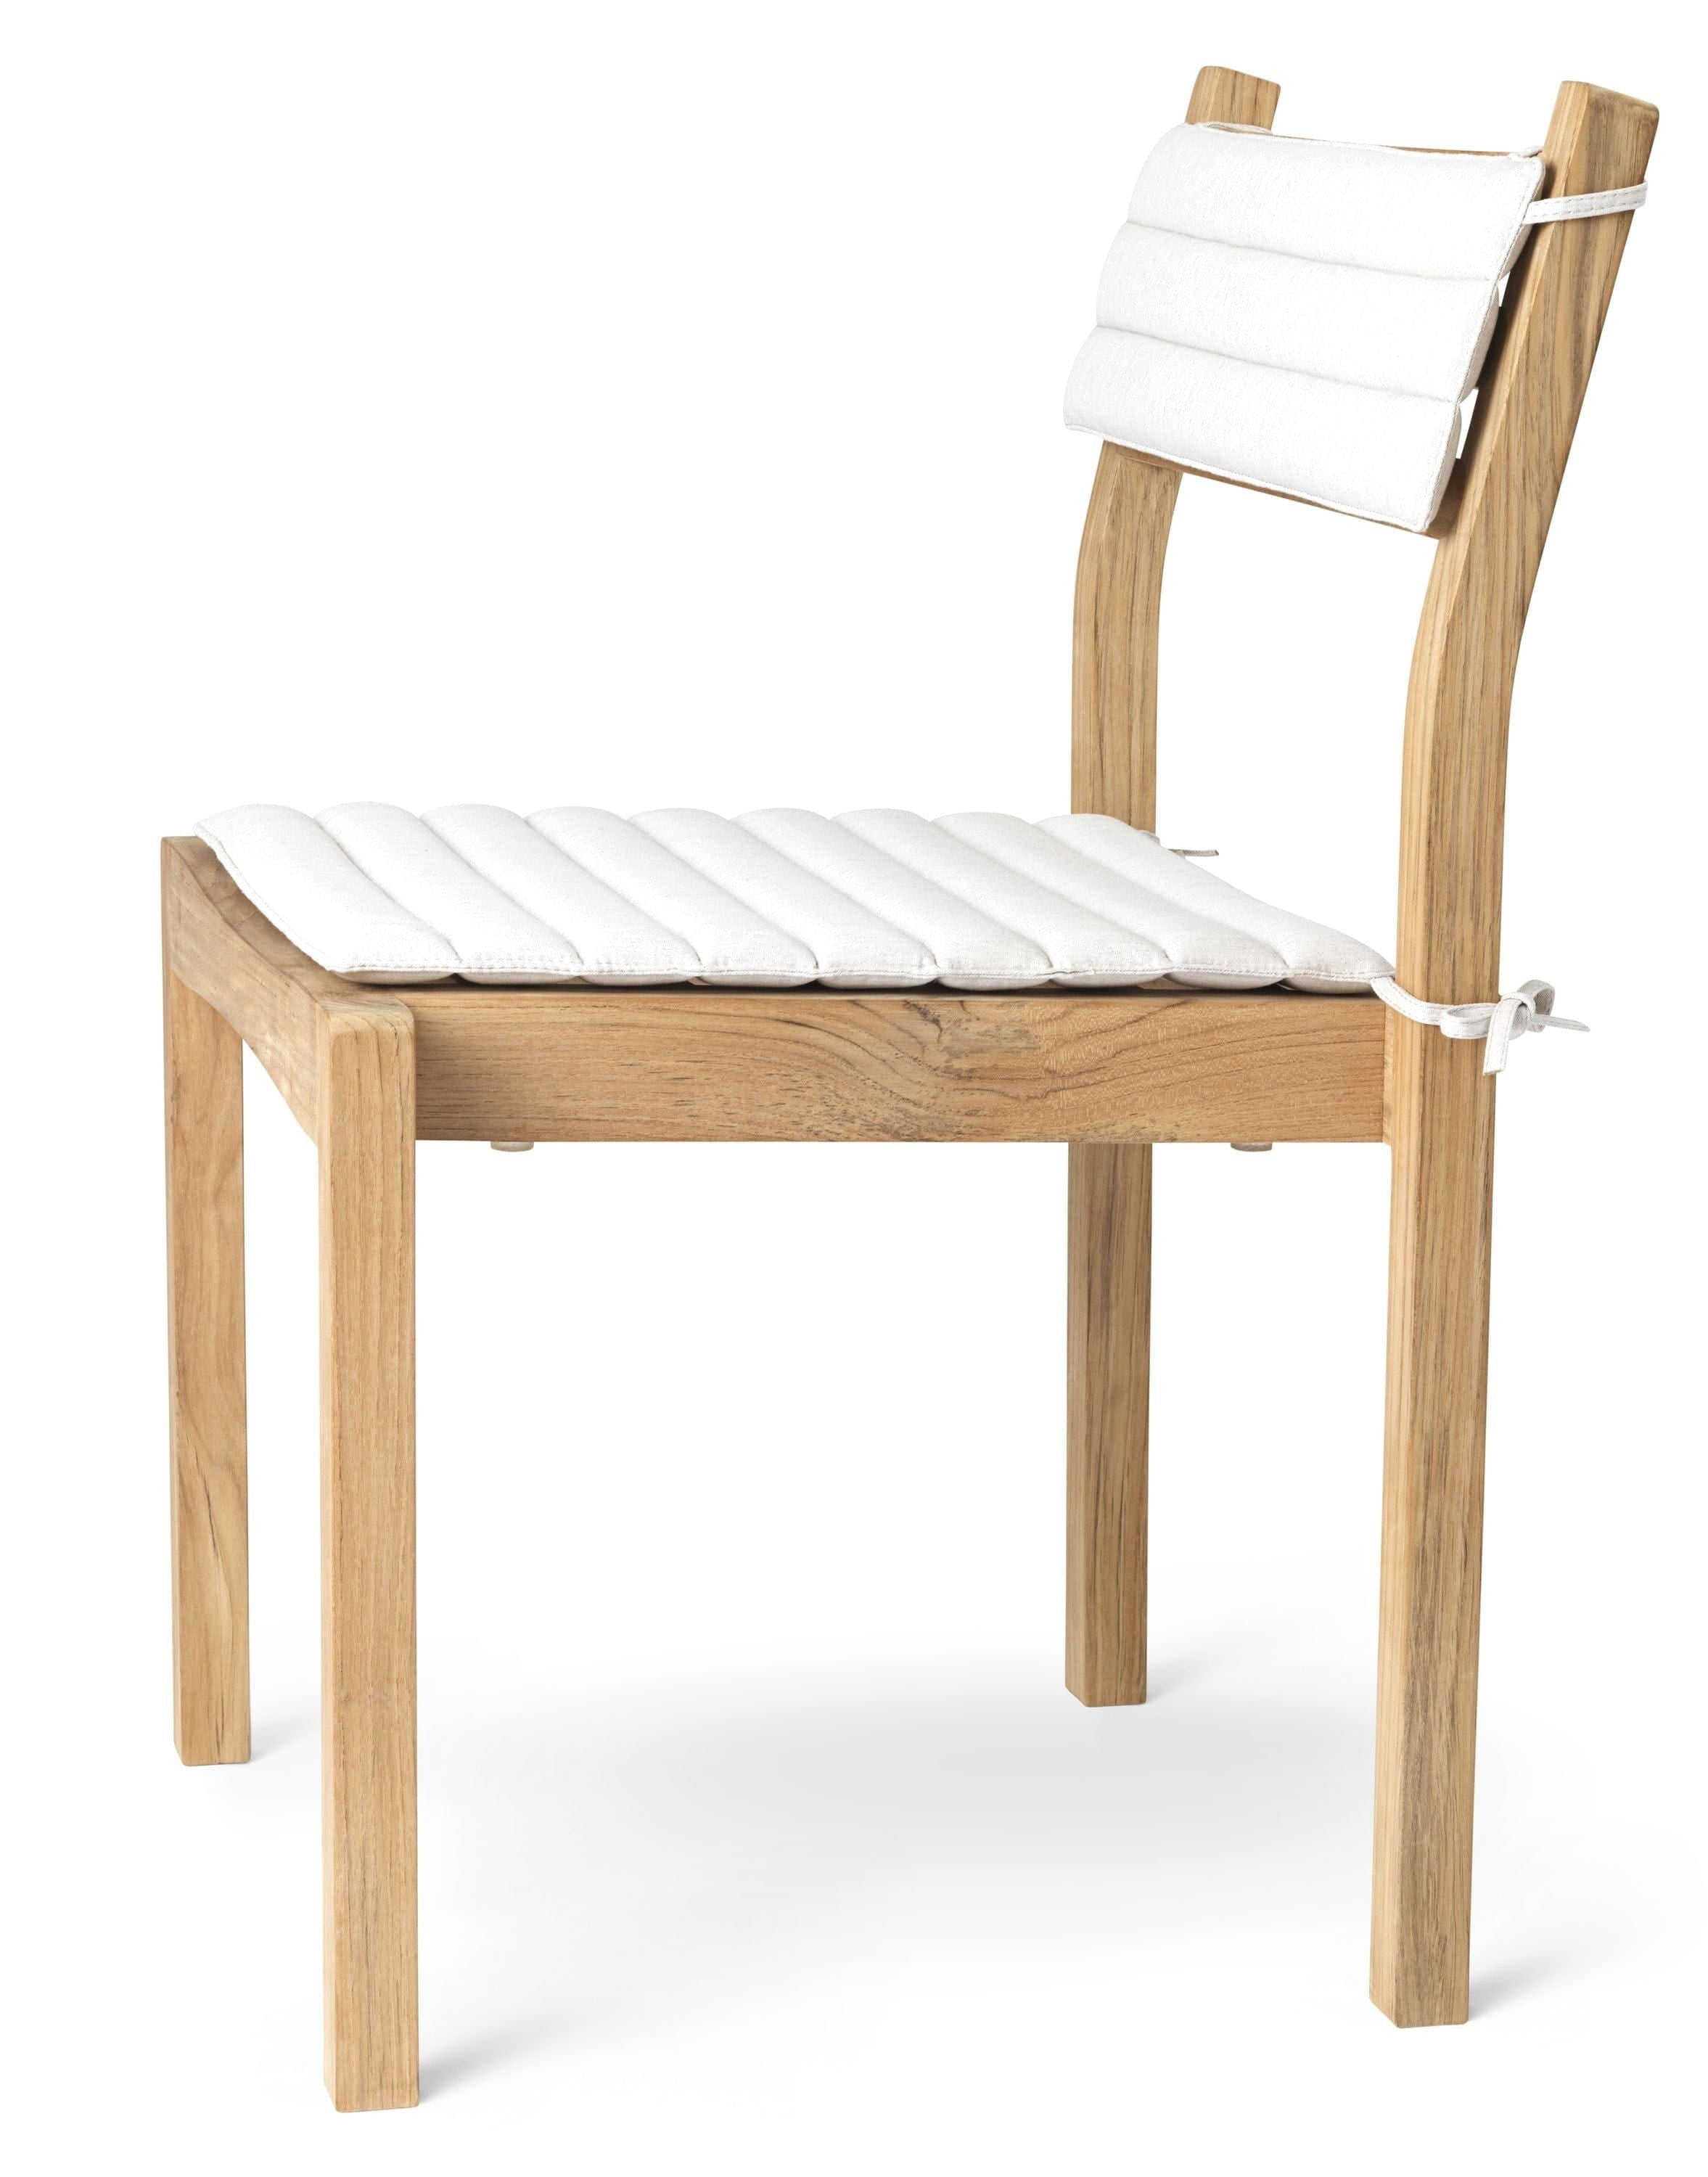 Carl Hansen AH501 Outdoorowa krzesło jadalne